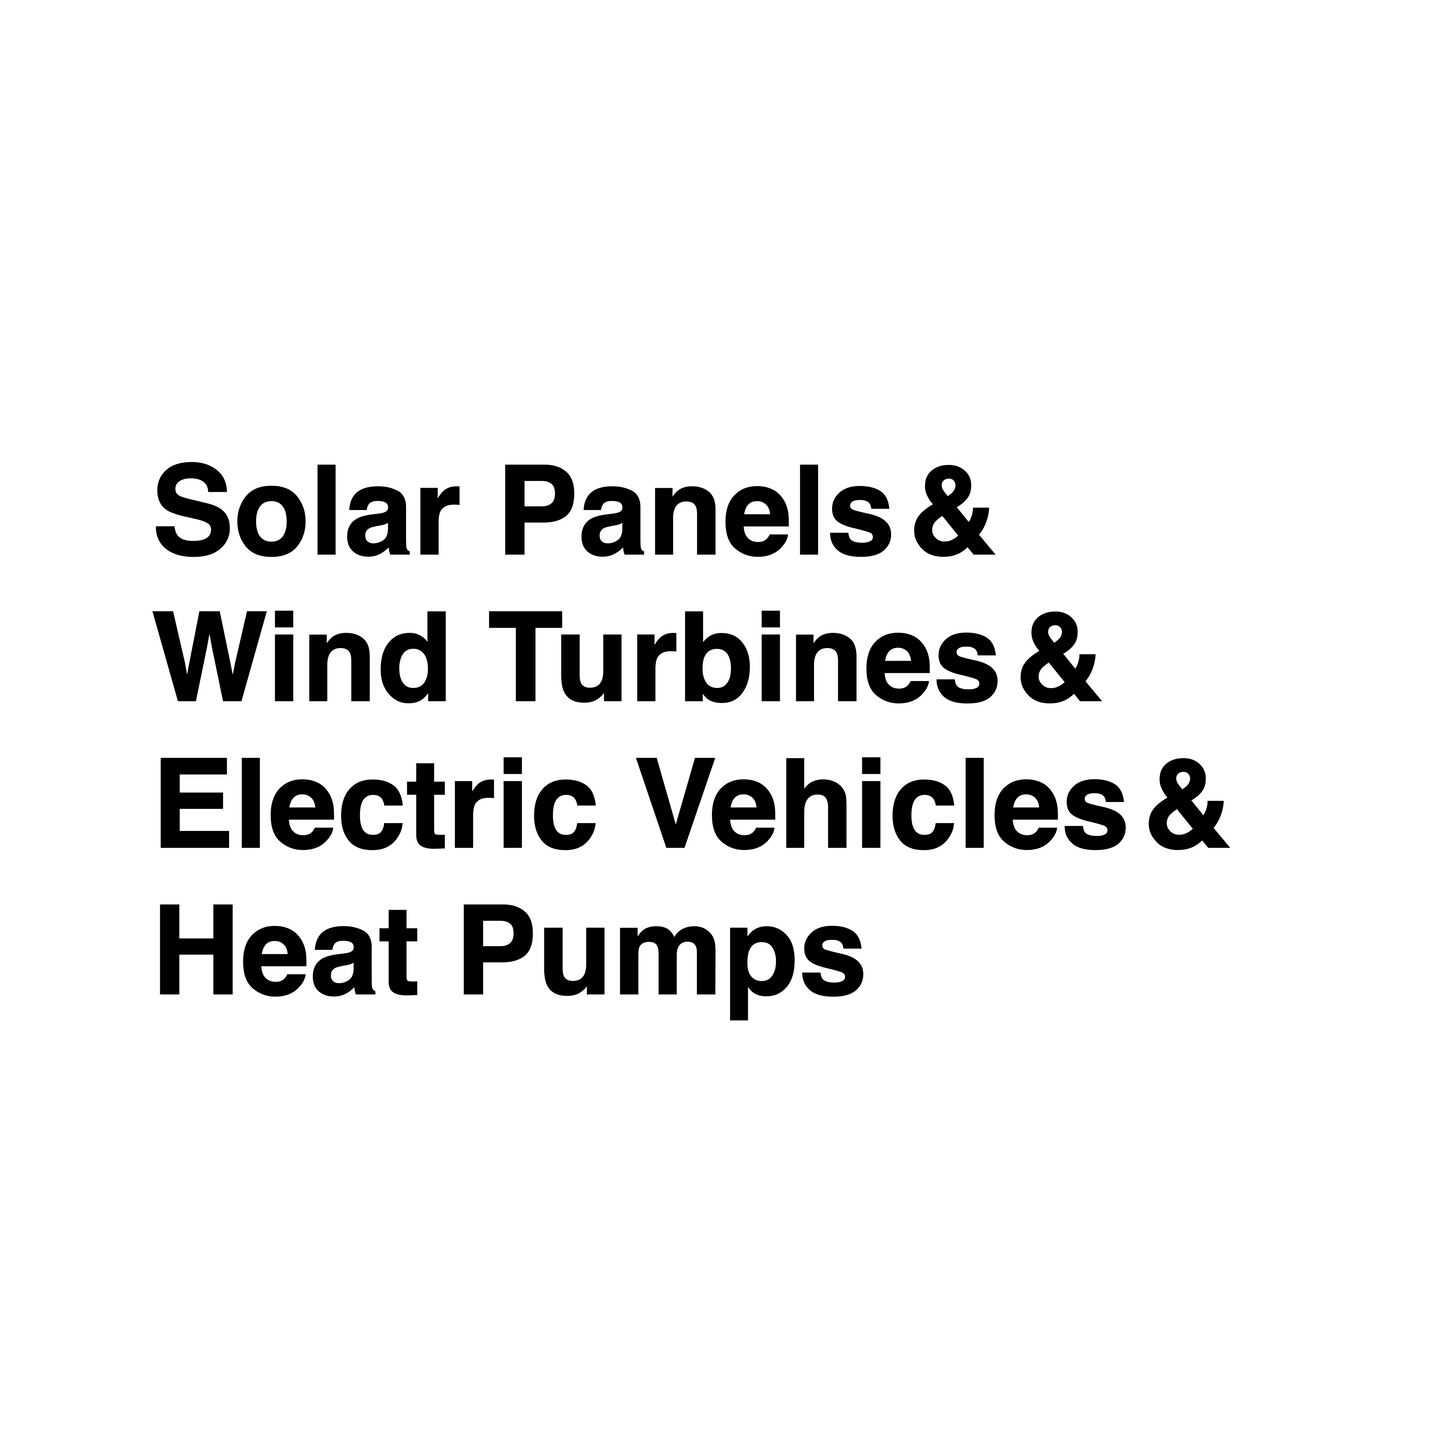 Solar Panels & Wind Turbines & Electric Vehicles & Heat Pumps Stickers